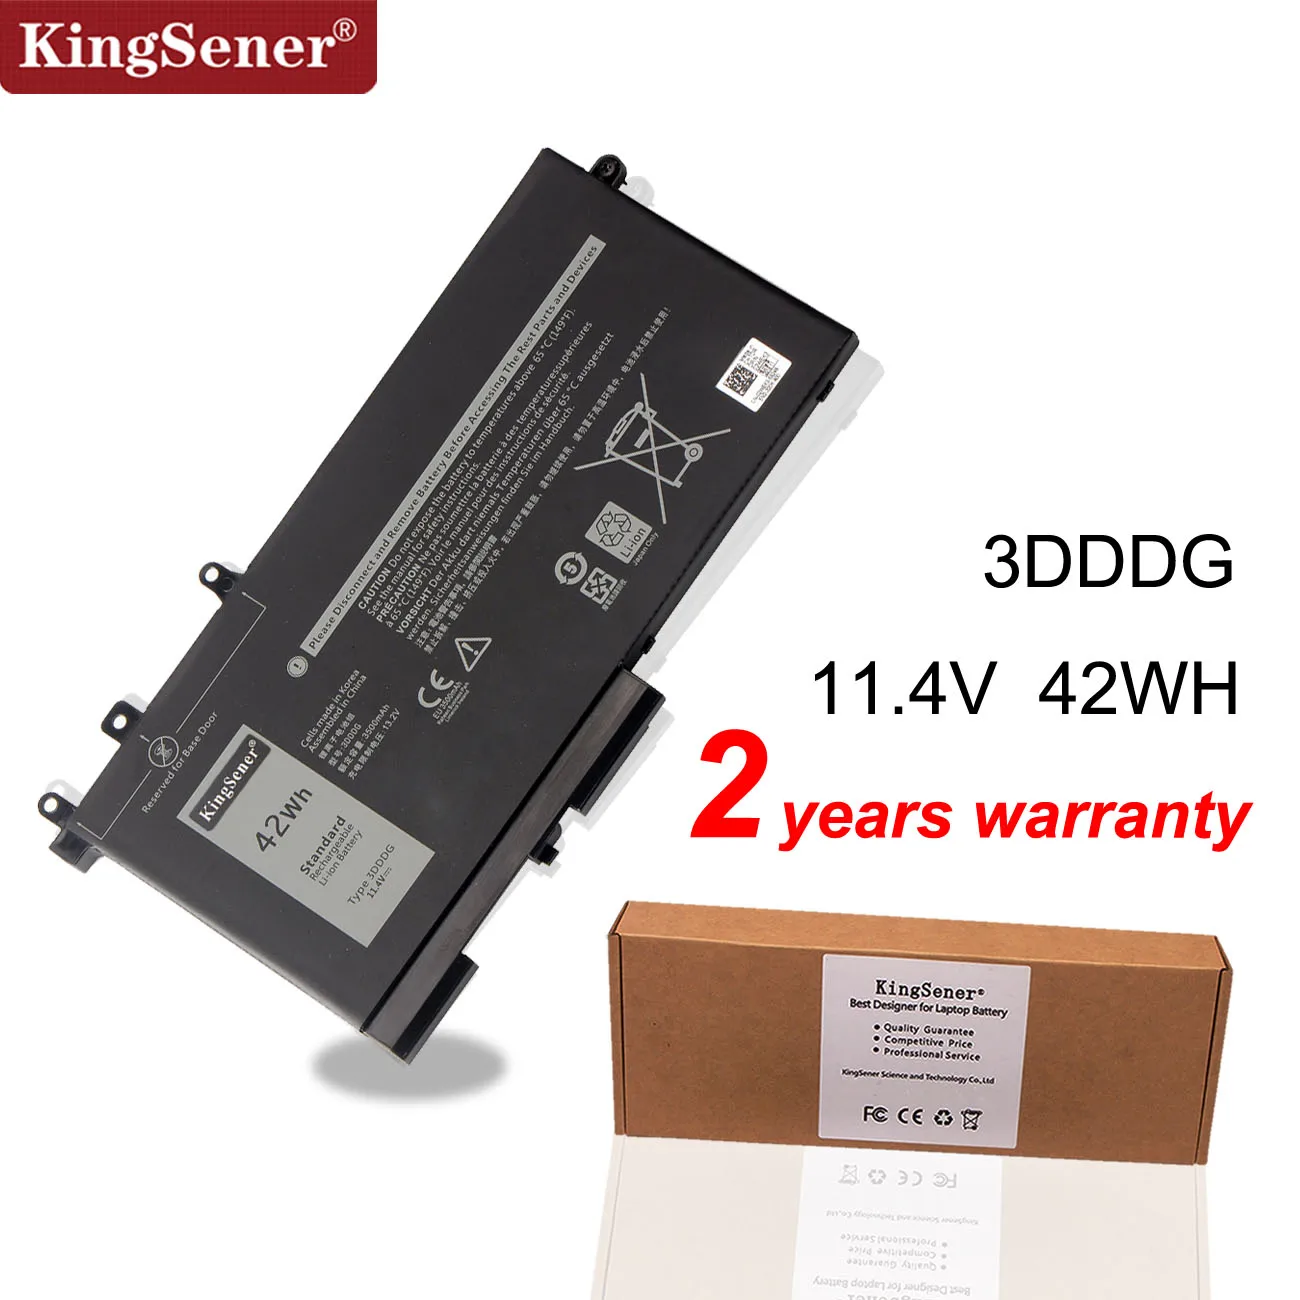 

KingSener 3DDDG Battery For Dell Latitude E5280 E5480 E5580 E5290 E5490 E5491 E5591 E5495 P27S Series 080JT9 03VC9Y 00JWGP 42Wh